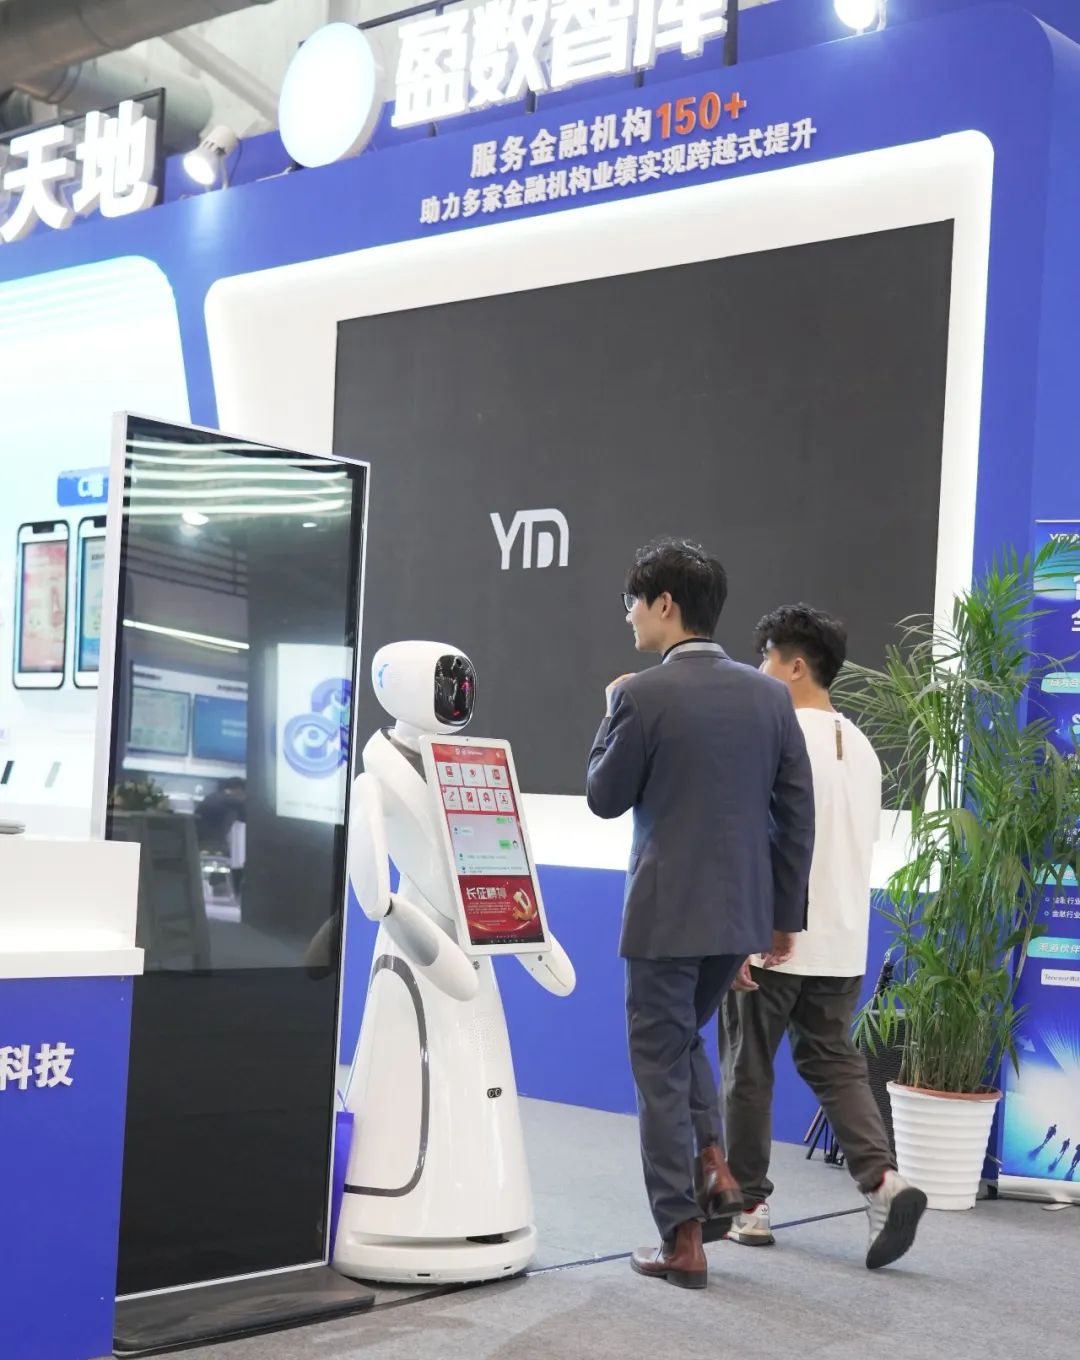 AI Service Robot Amy auxilia 2023 Suzhou Digital Finance Application Expo, demonstrando força tecnológica líder global.